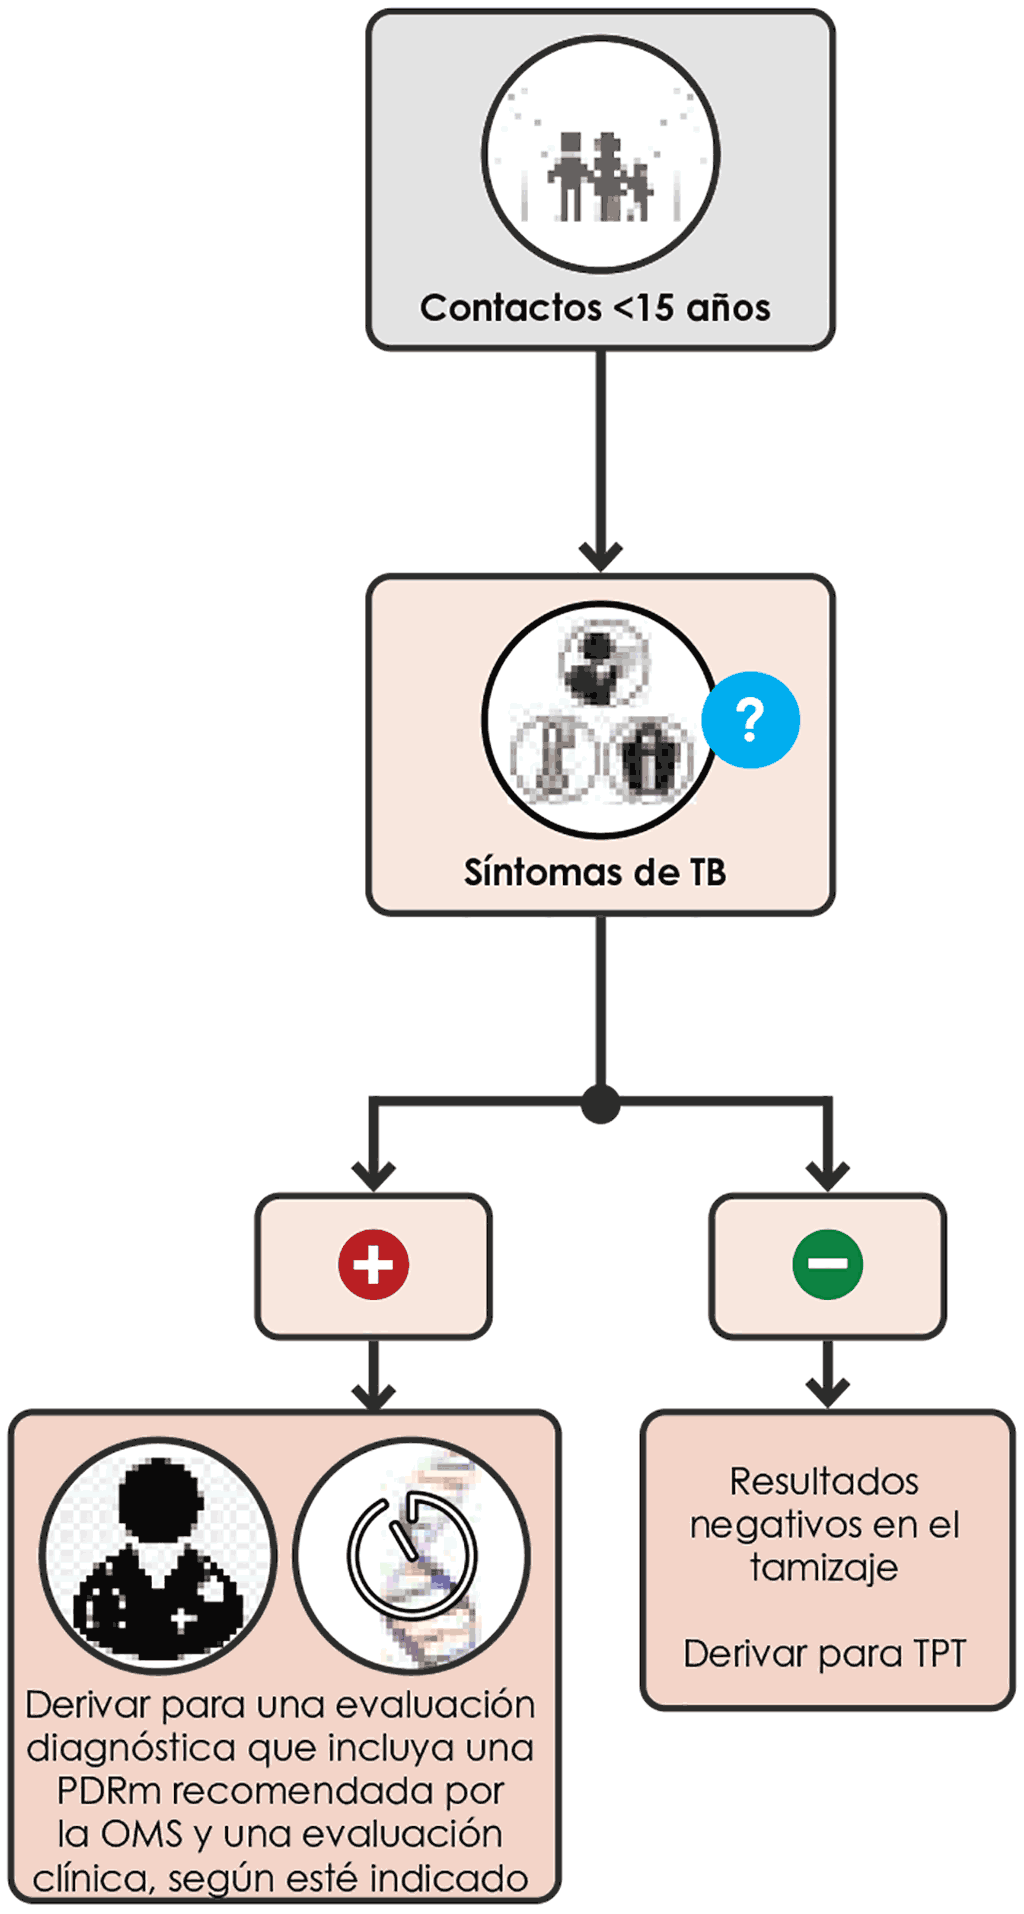 Figure 2.3. Algorithm for TB screening in children with symptoms